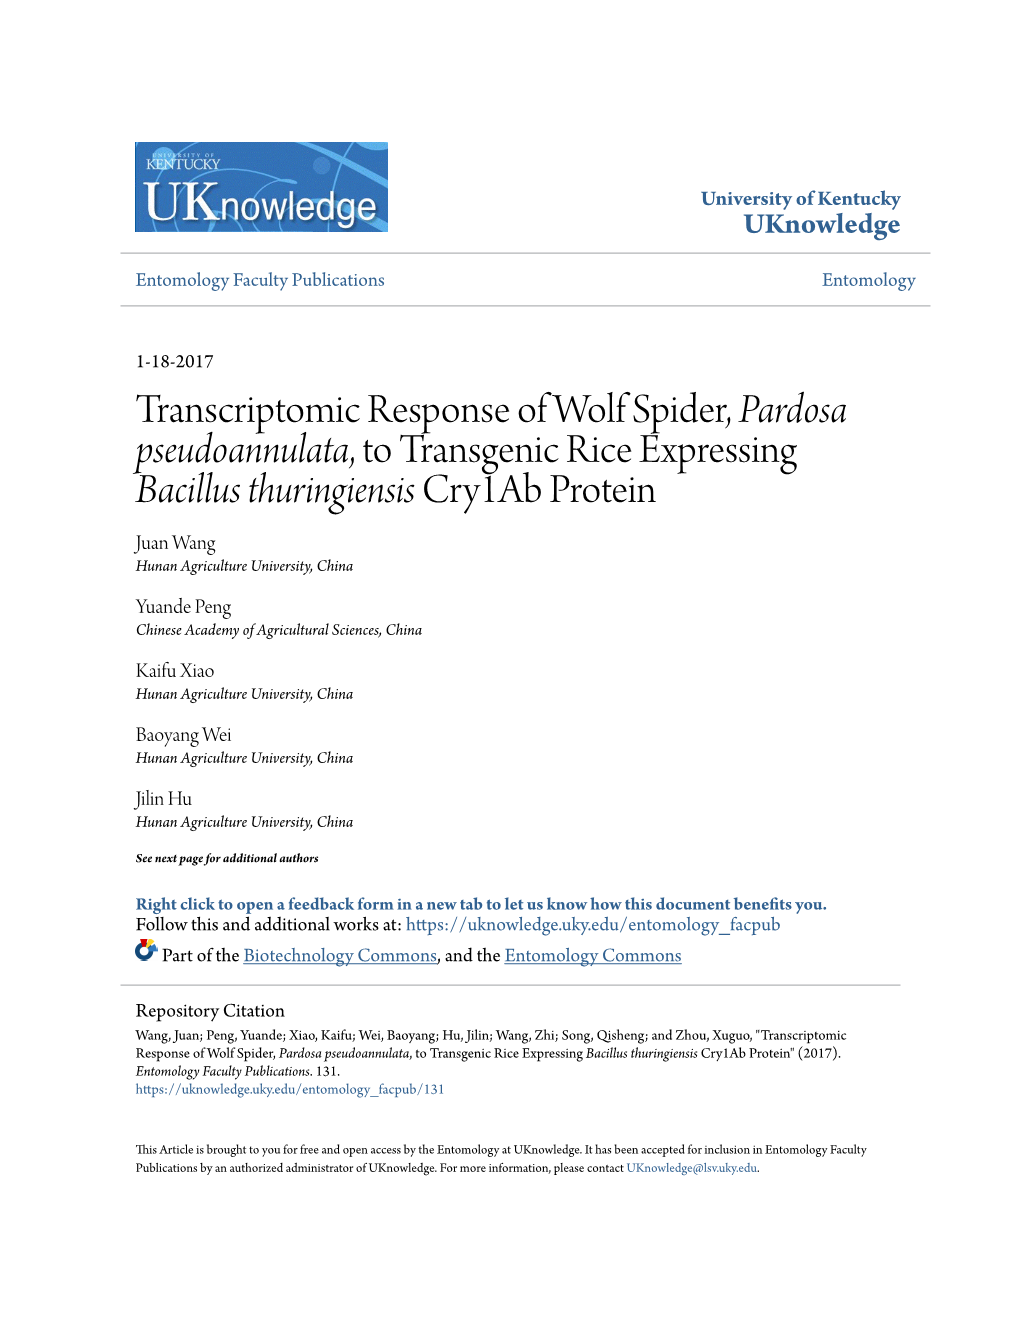 Transcriptomic Response of Wolf Spider, Pardosa Pseudoannulata